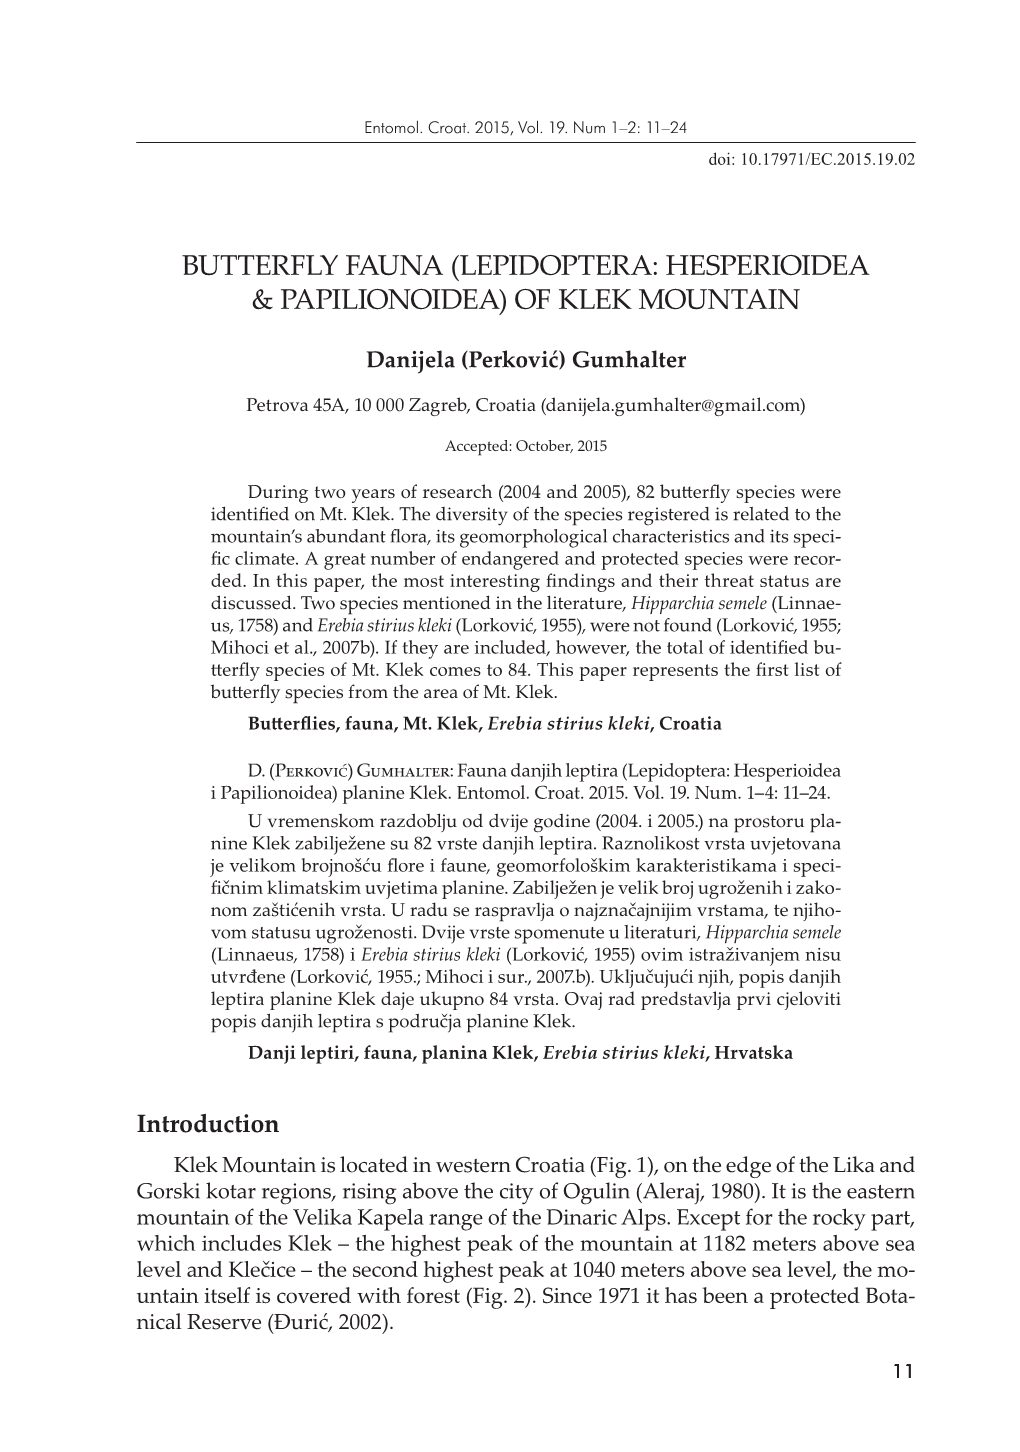 Butterfly Fauna (Lepidoptera: Hesperioidea & Papilionoidea) of Klek Mountain